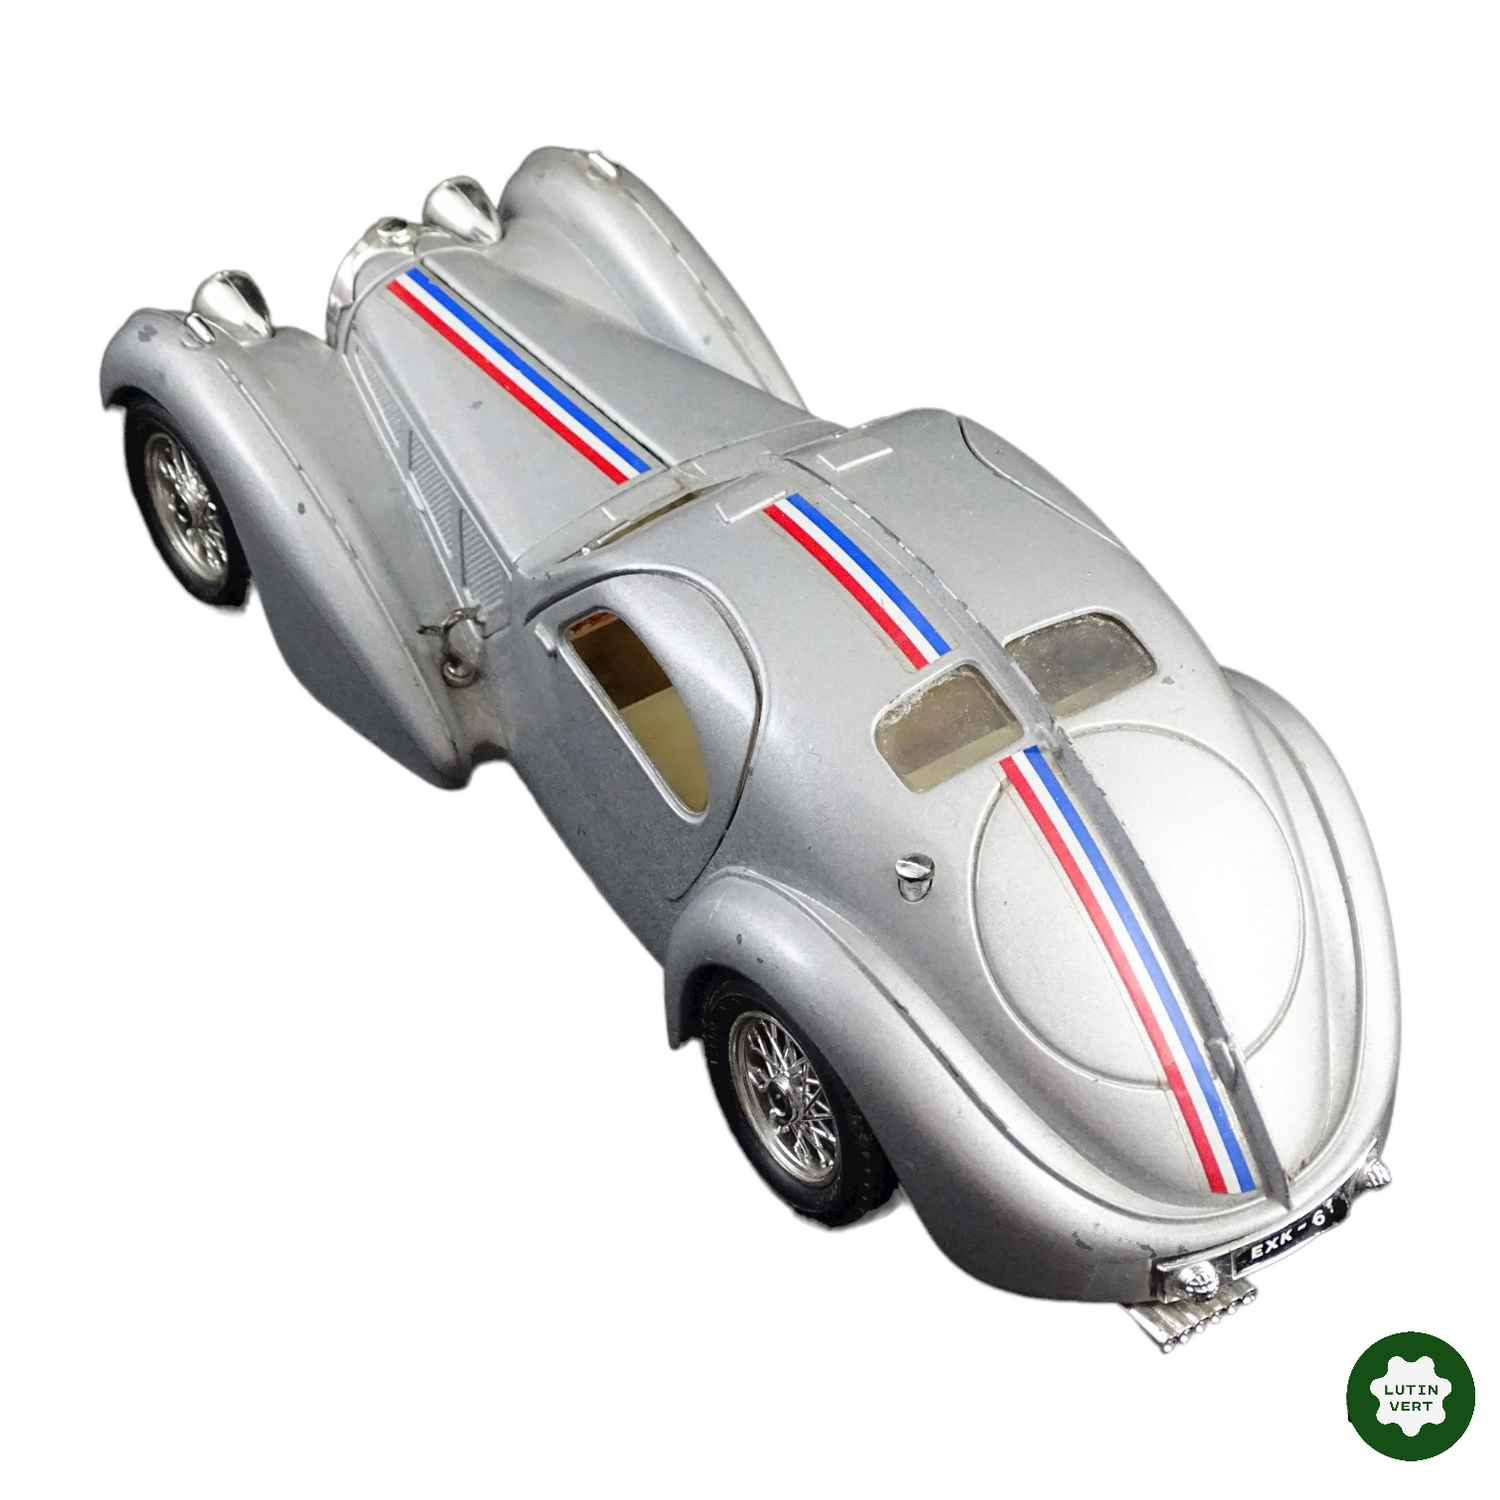 Voiture miniature de collection Bugatti d'occasion - BURAGO – Lutin Vert -  Recyclerie de jouets